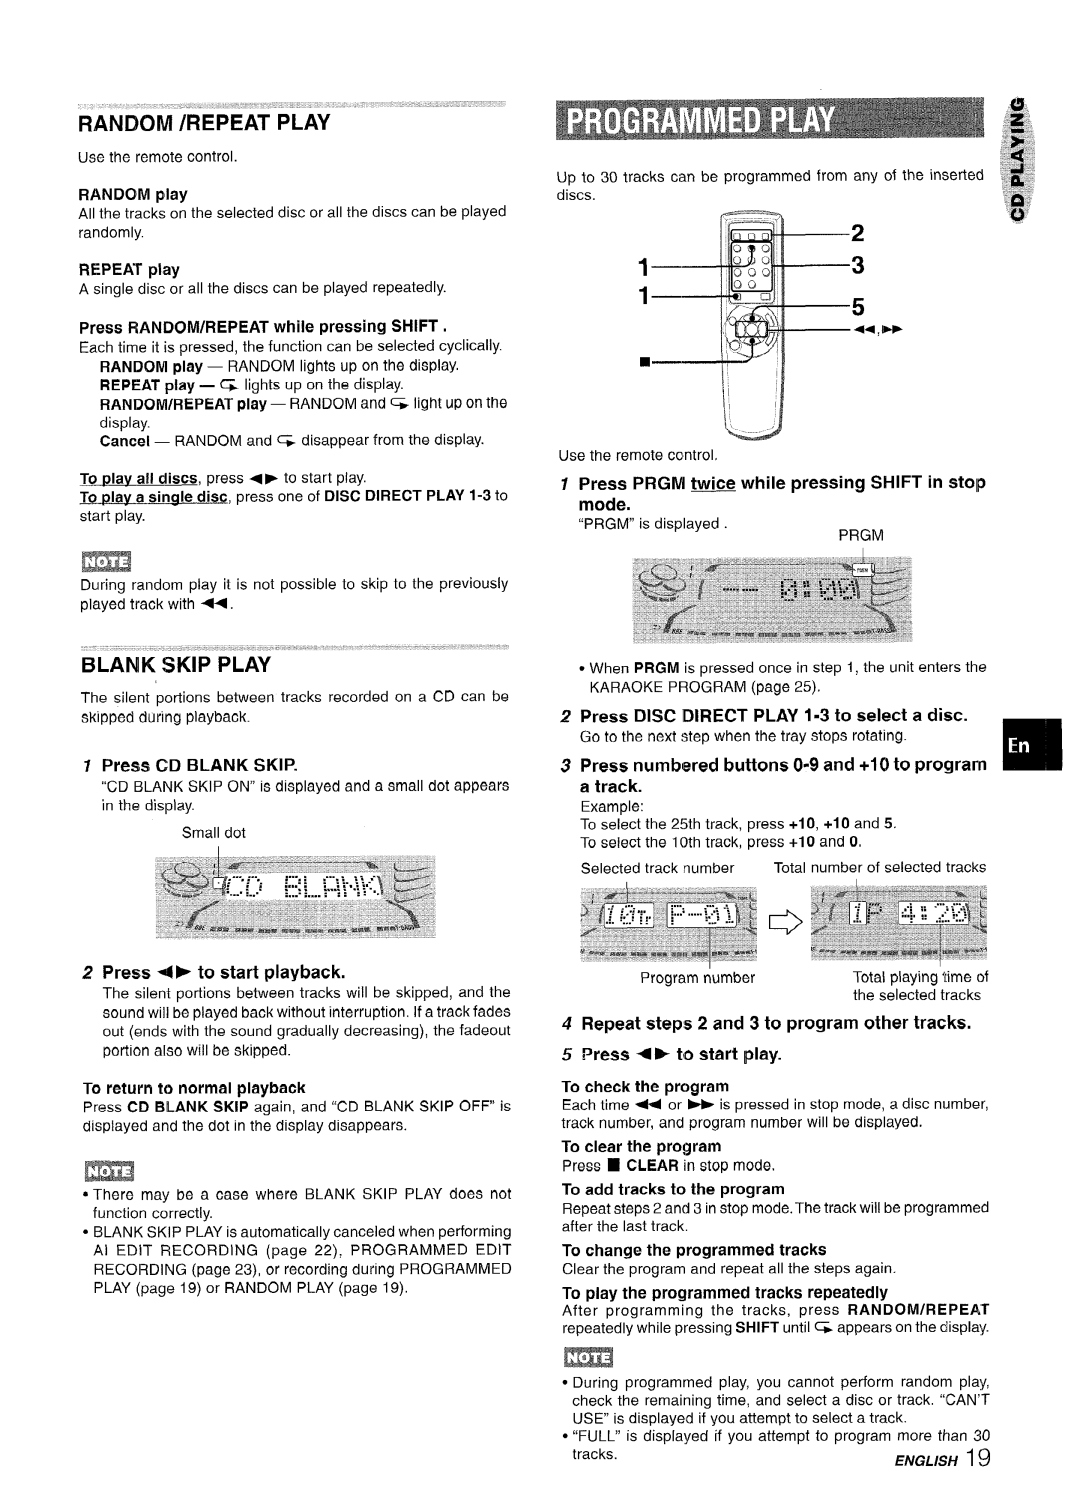 Sony NSX-A777 manual Blank Skip Play, Press CD BLANK SKIP, Press + ~ to start playback, in stolp, Press 4 to start play 